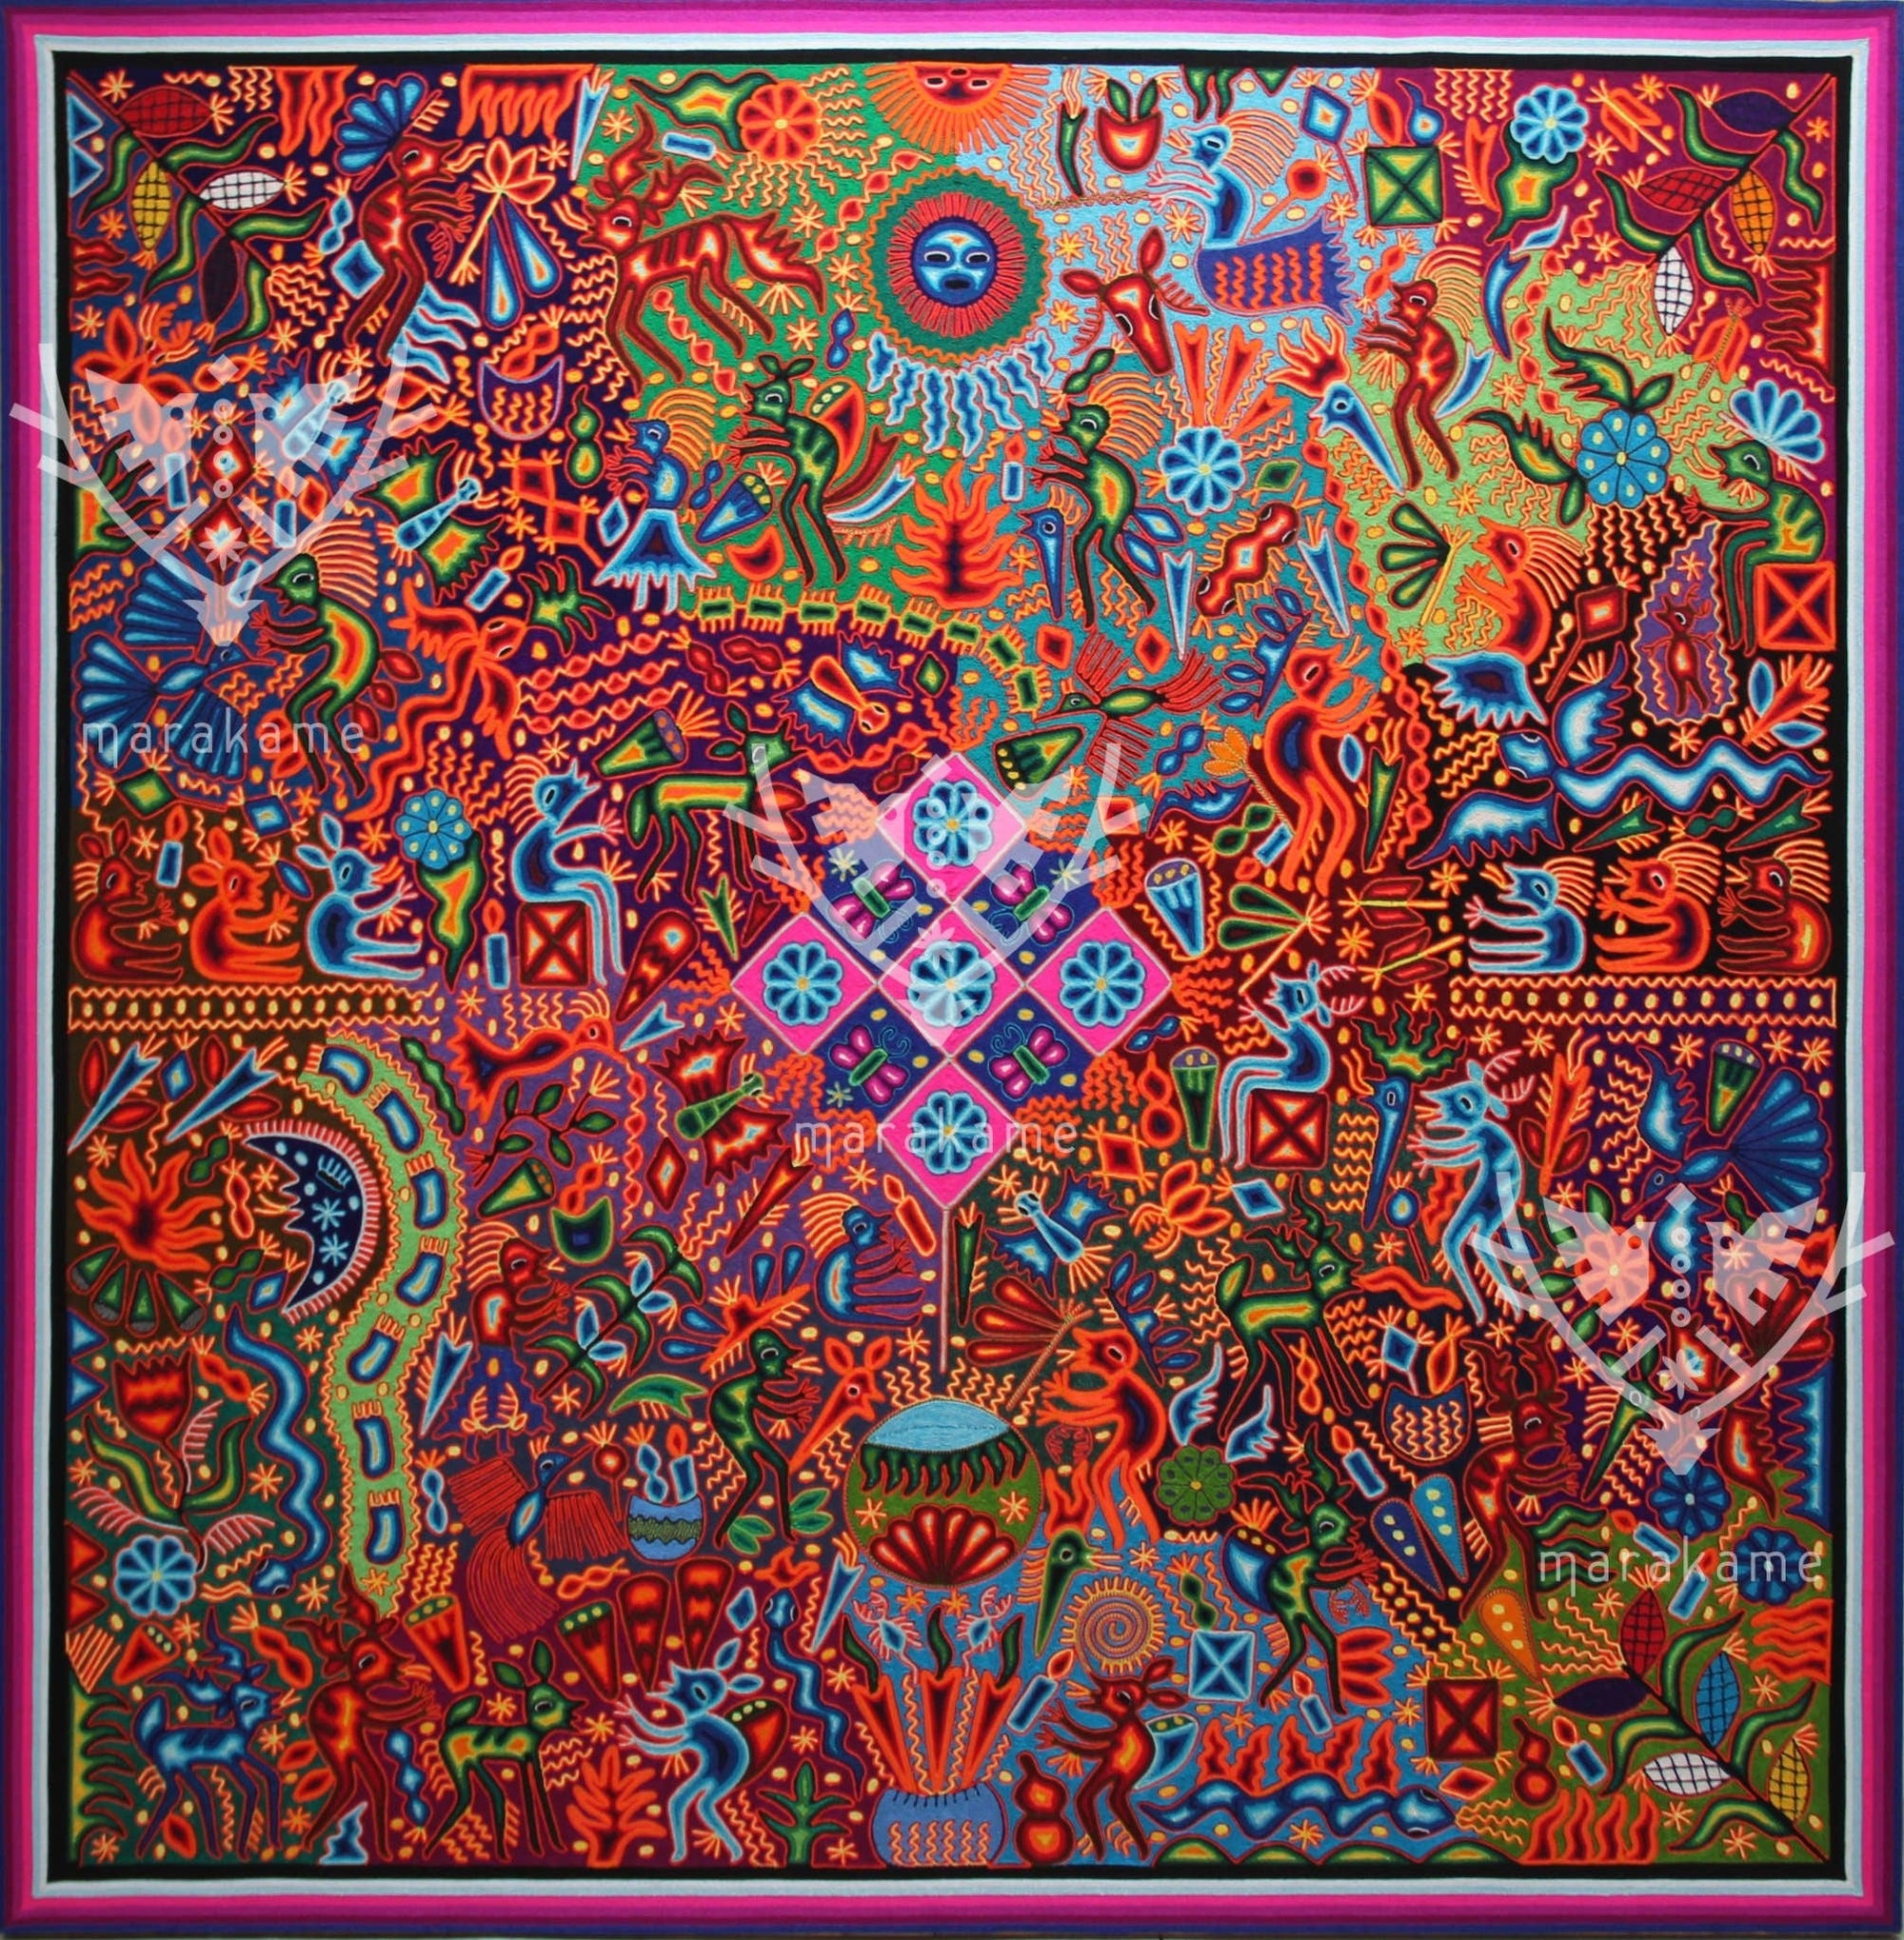 Nierika de Estambre Cuadro Huichol - Wexik+a nierikaya - 200 x 200 cm. - Arte Huichol - Marakame